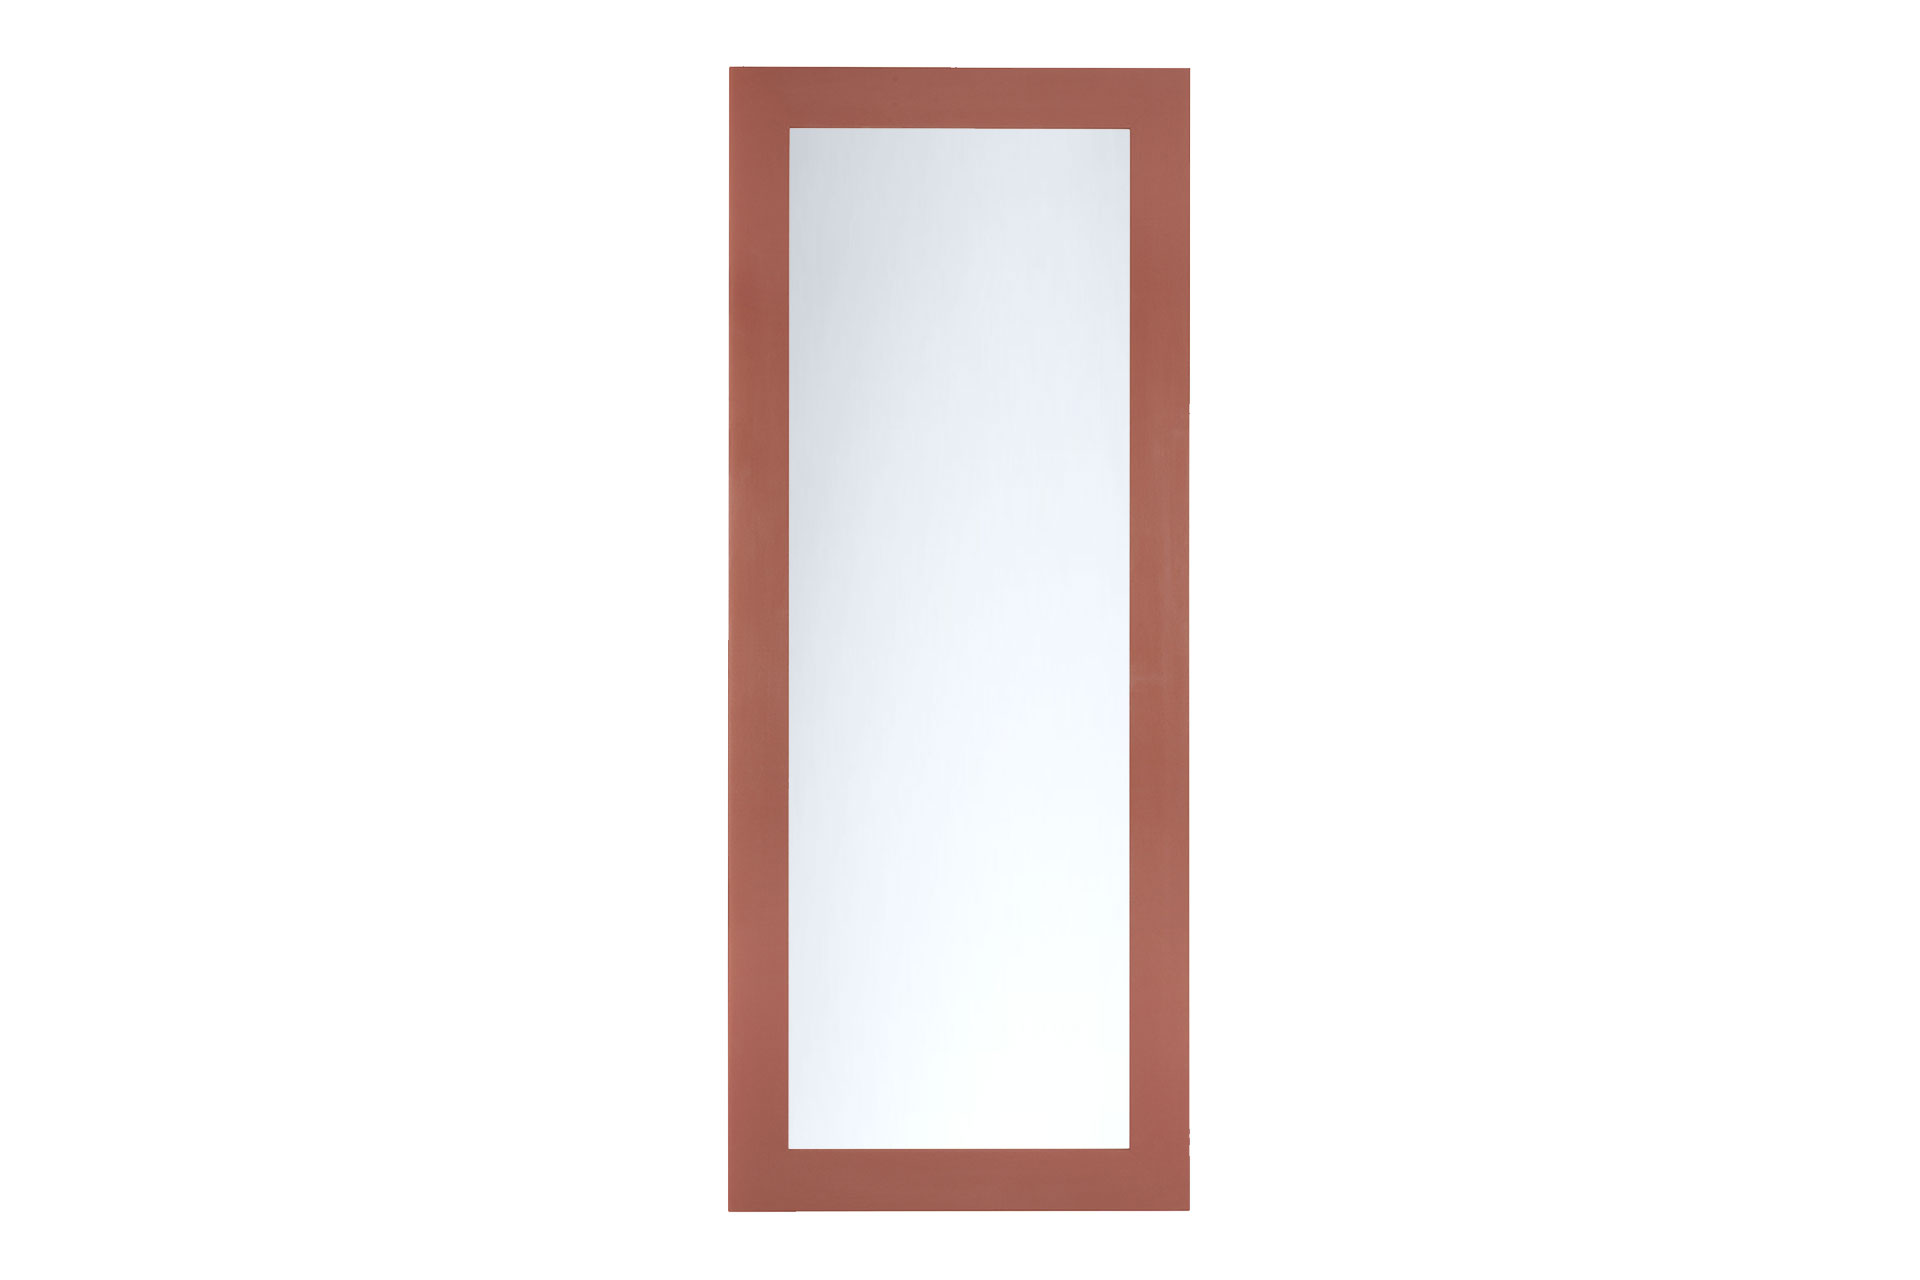 Wandspiegel Modell Como, Design/Farbe: rotbraun, Spiegel: Facettenspiegel, Form: rechteckig, Material: Holz, Raum: Innenbereich, Style: modern, Herstellung: by ASR-Rahmendesign, Produktkategorie: Vintage